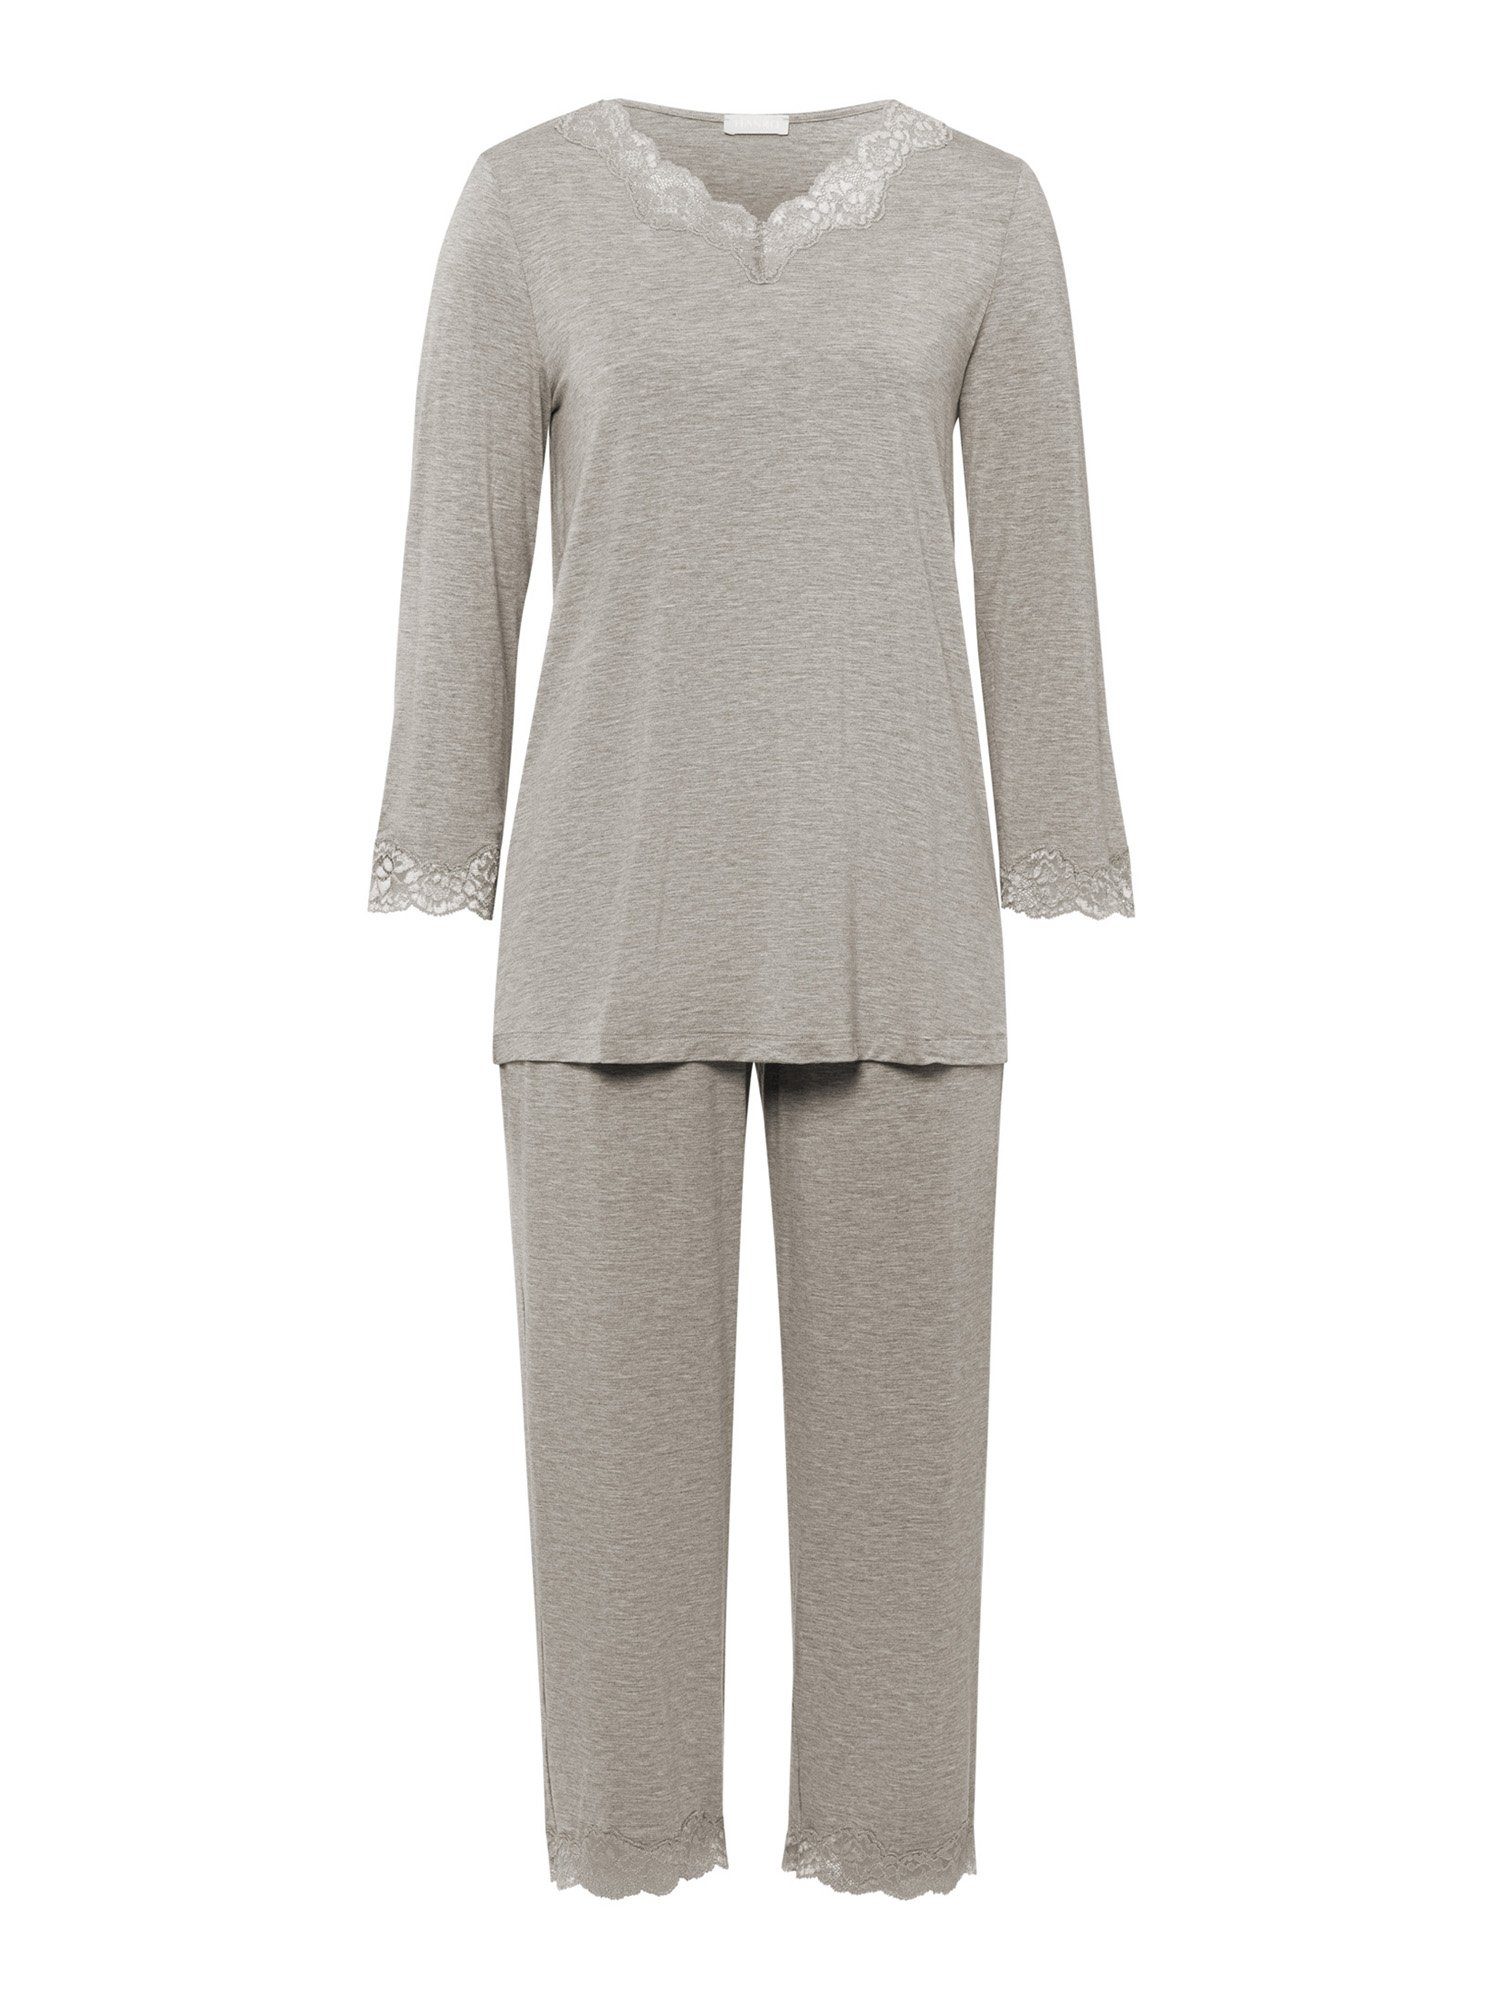 Hanro Pyjama Natural Elegance grey melange